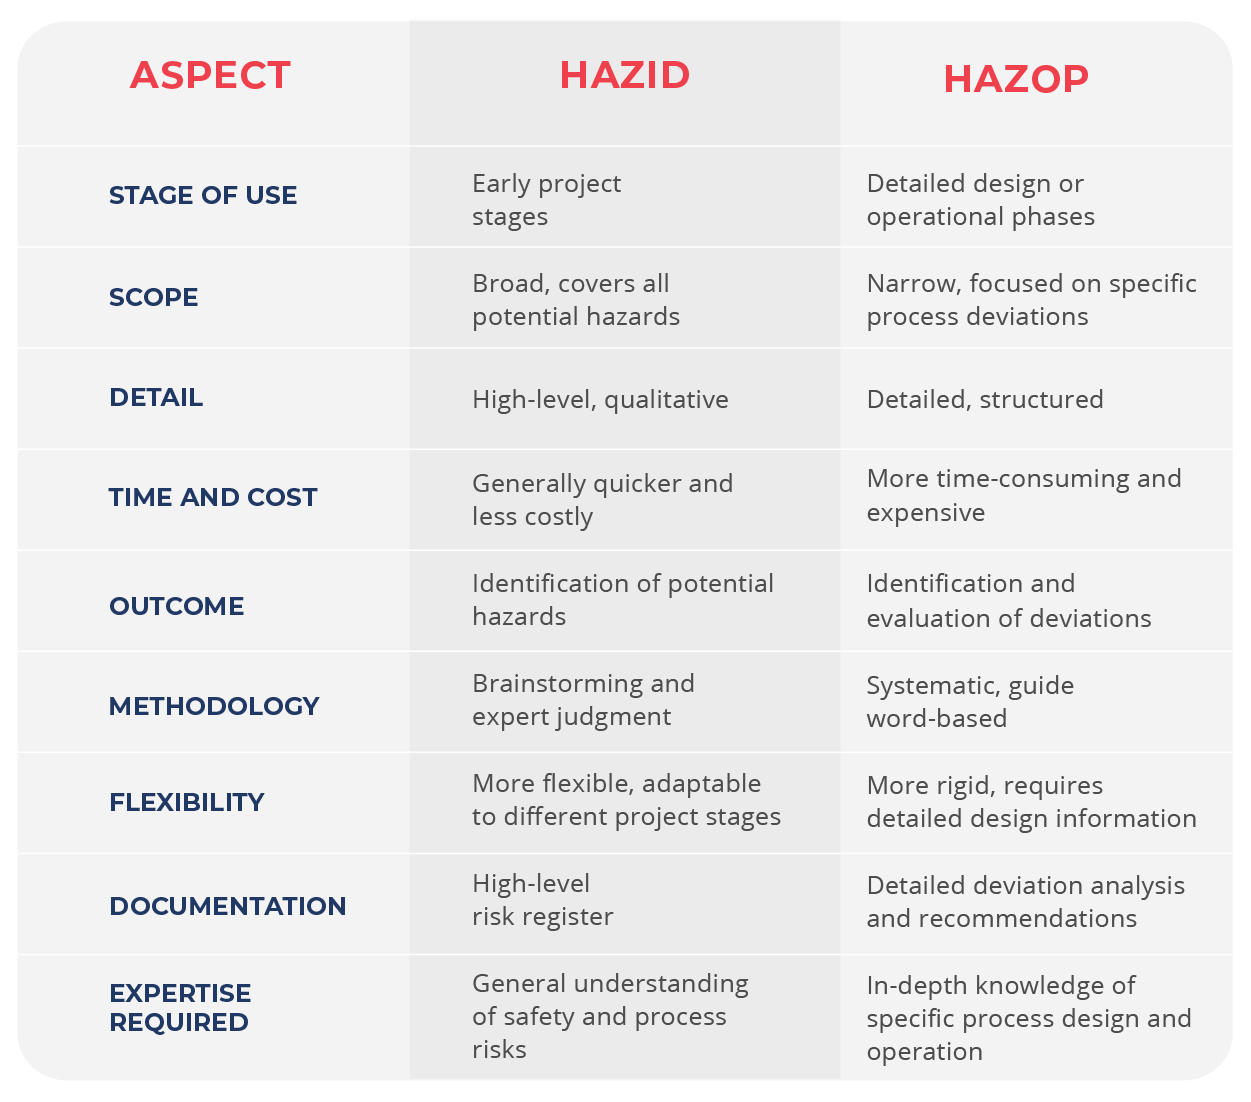 HAZID V HAZOP pros and cons table